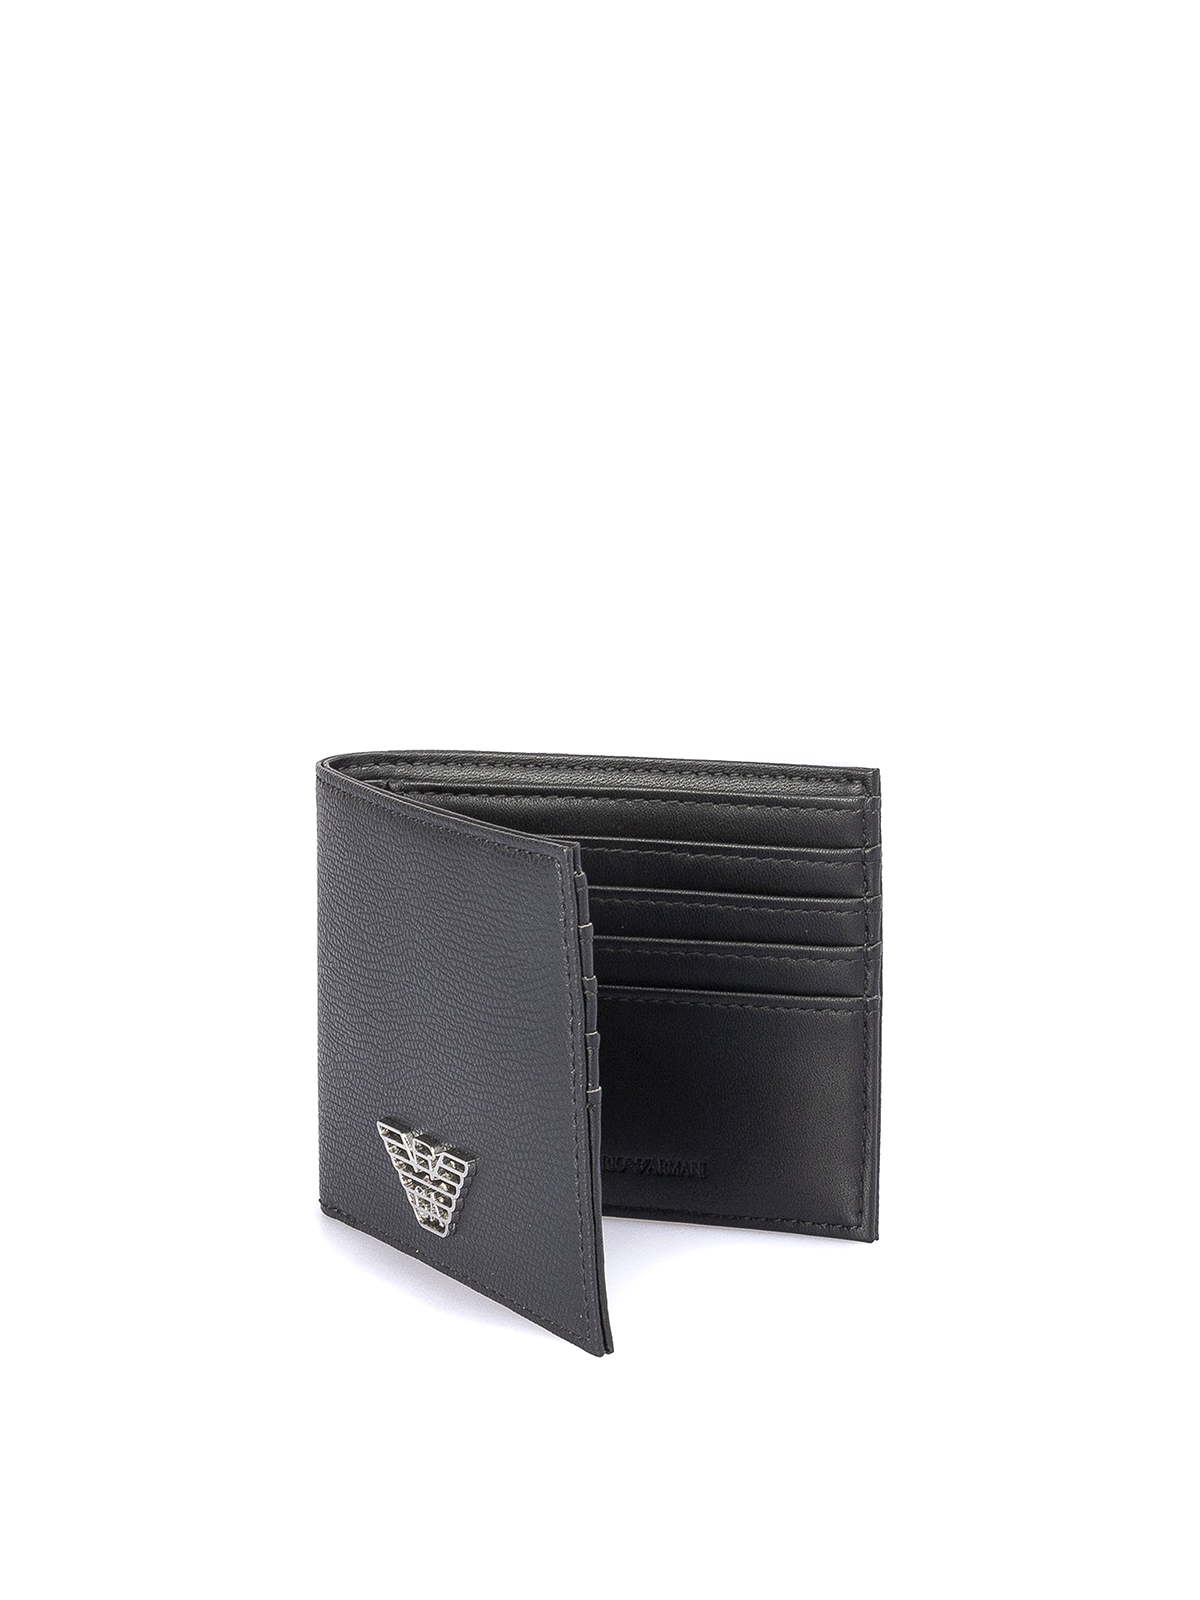 Men's Faux Leather Wallets & Card Cases